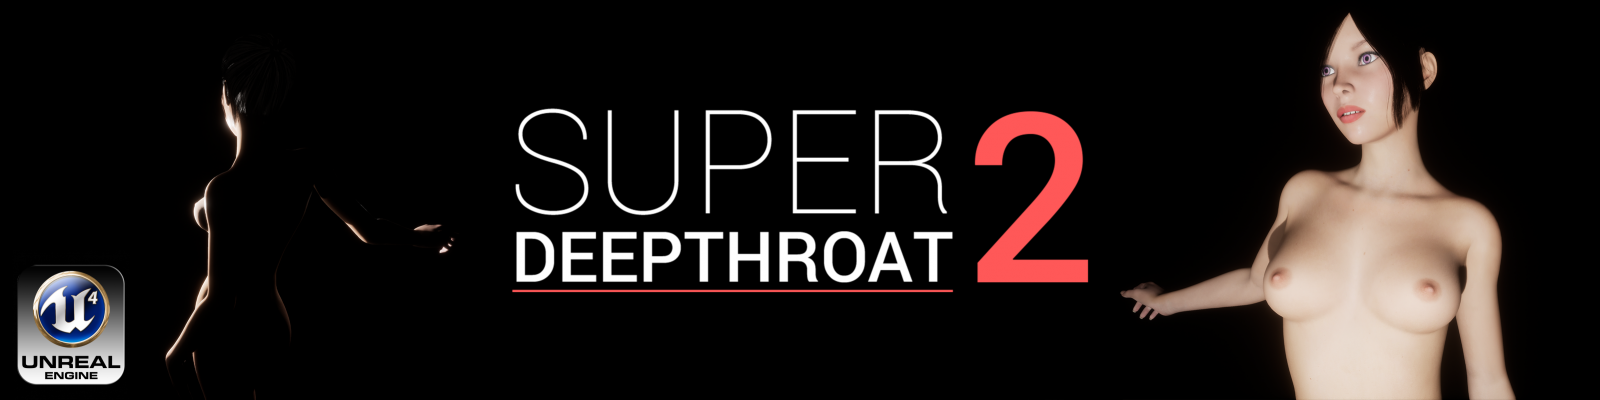 Super DeepThroat 2 v0.0.8.0 by Hnomer Studio eng